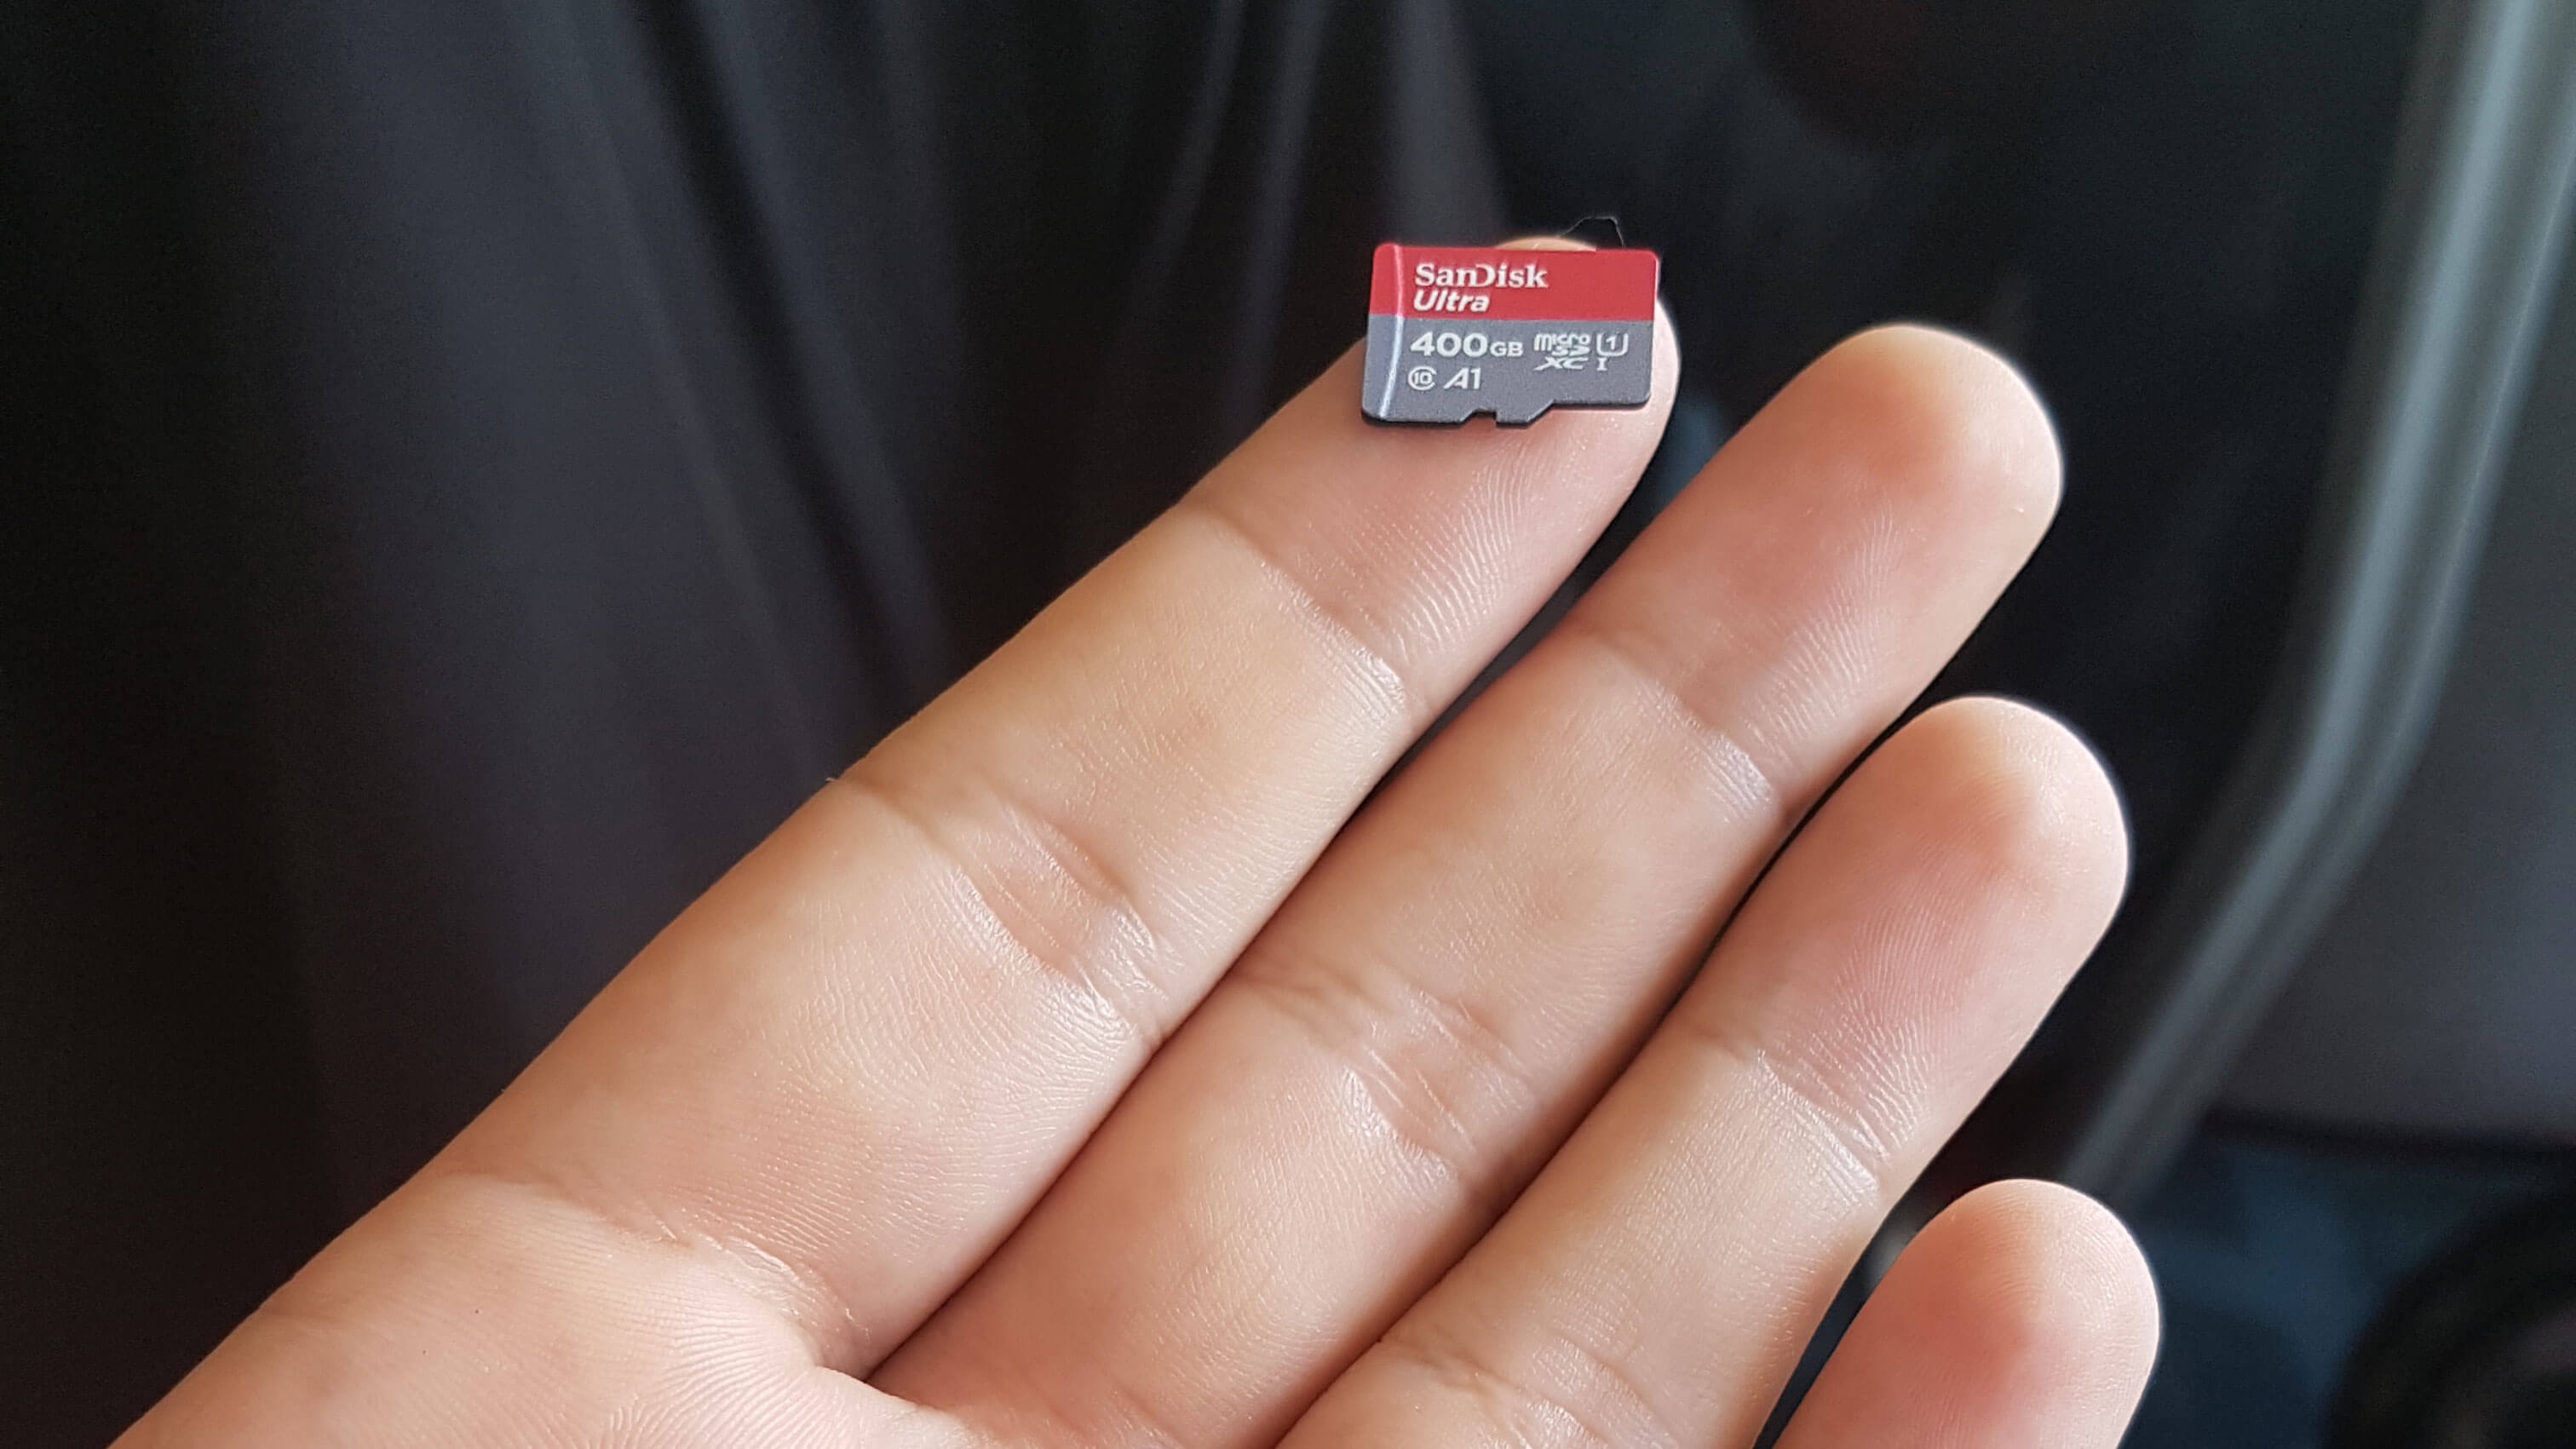 Sandisk Ultra 400GB MicroSD